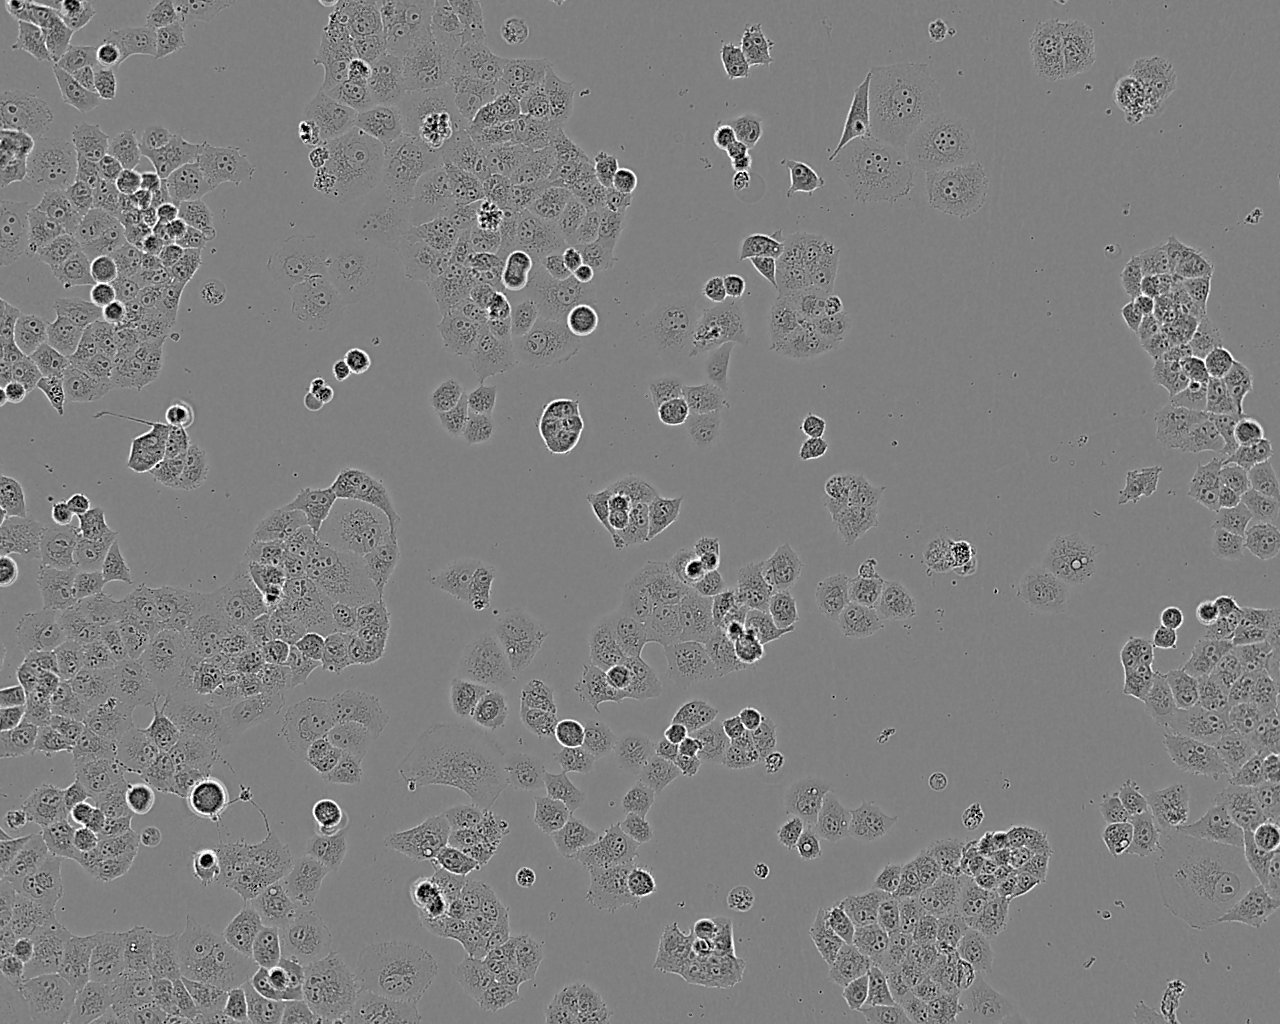 NCI-H1618 Cell|人小细胞肺癌细胞